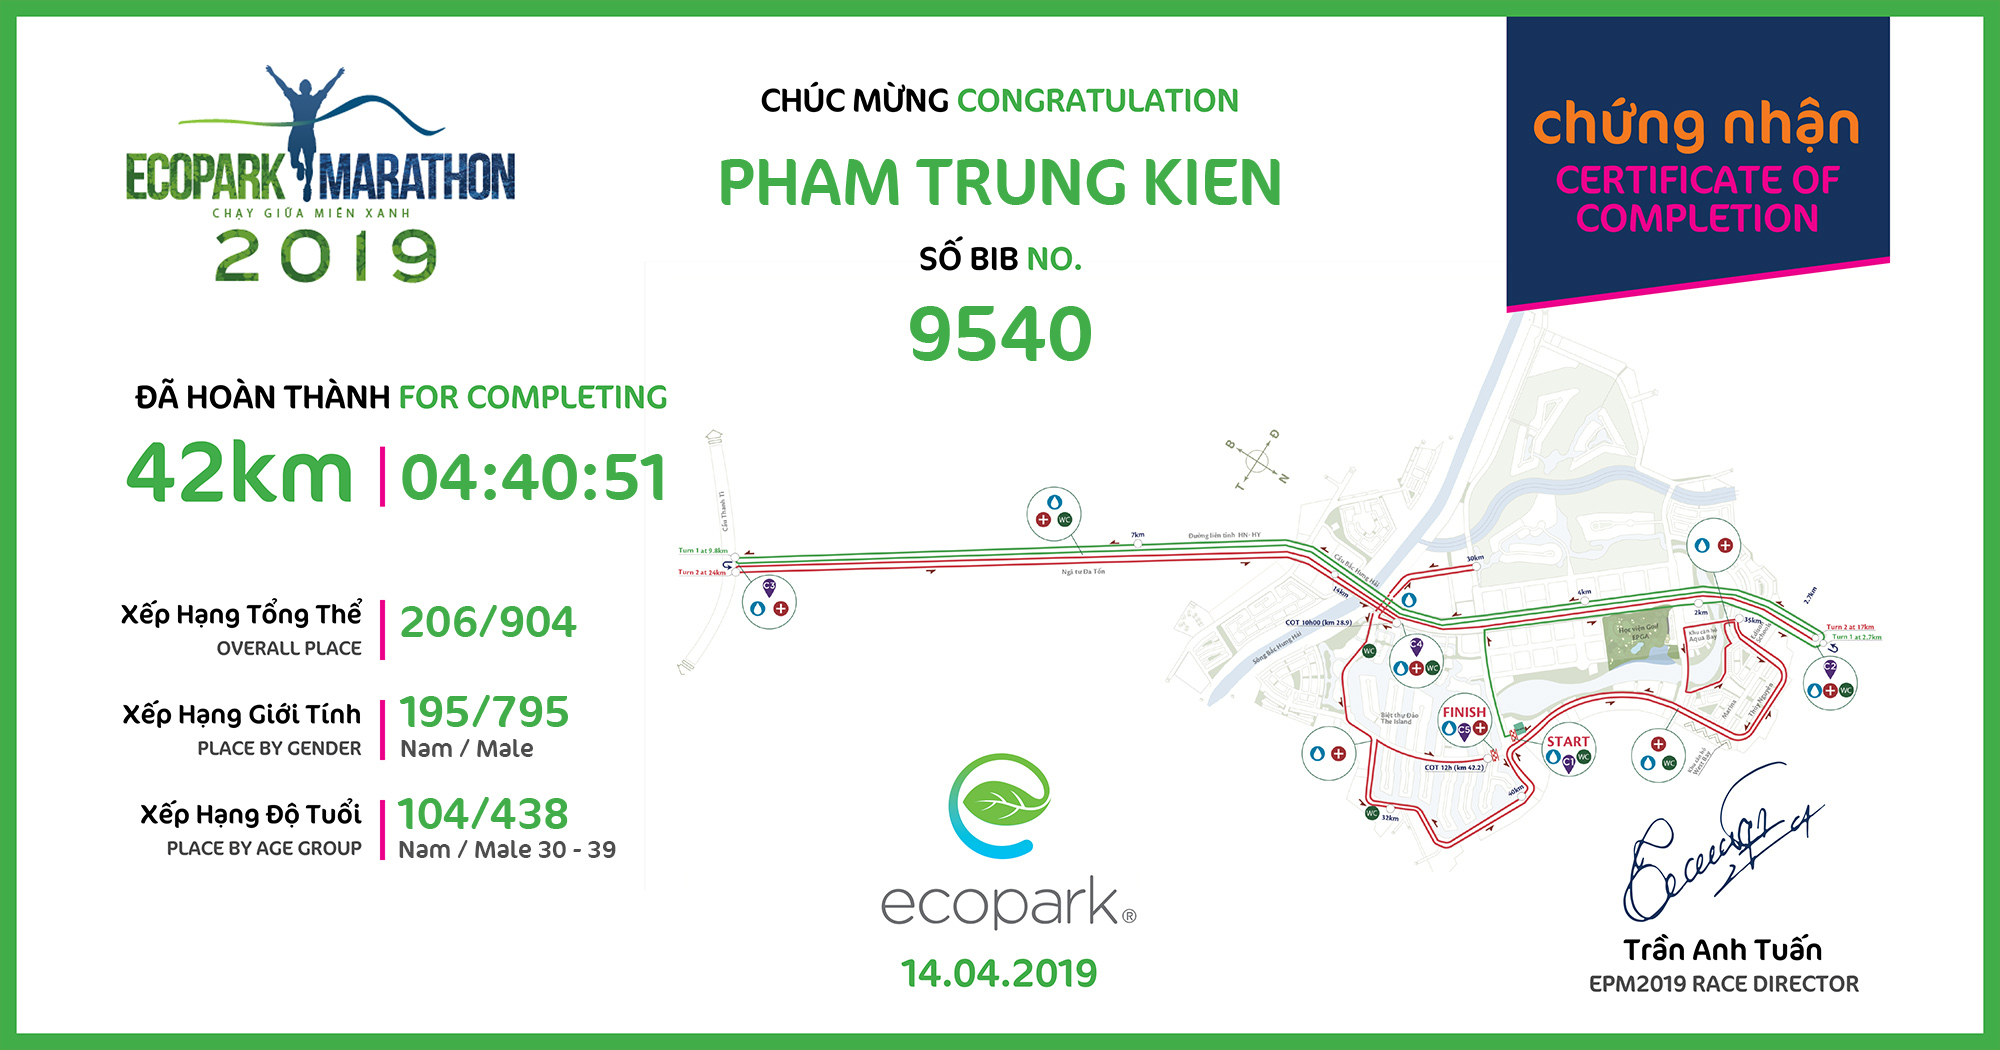 9540 - Pham Trung Kien